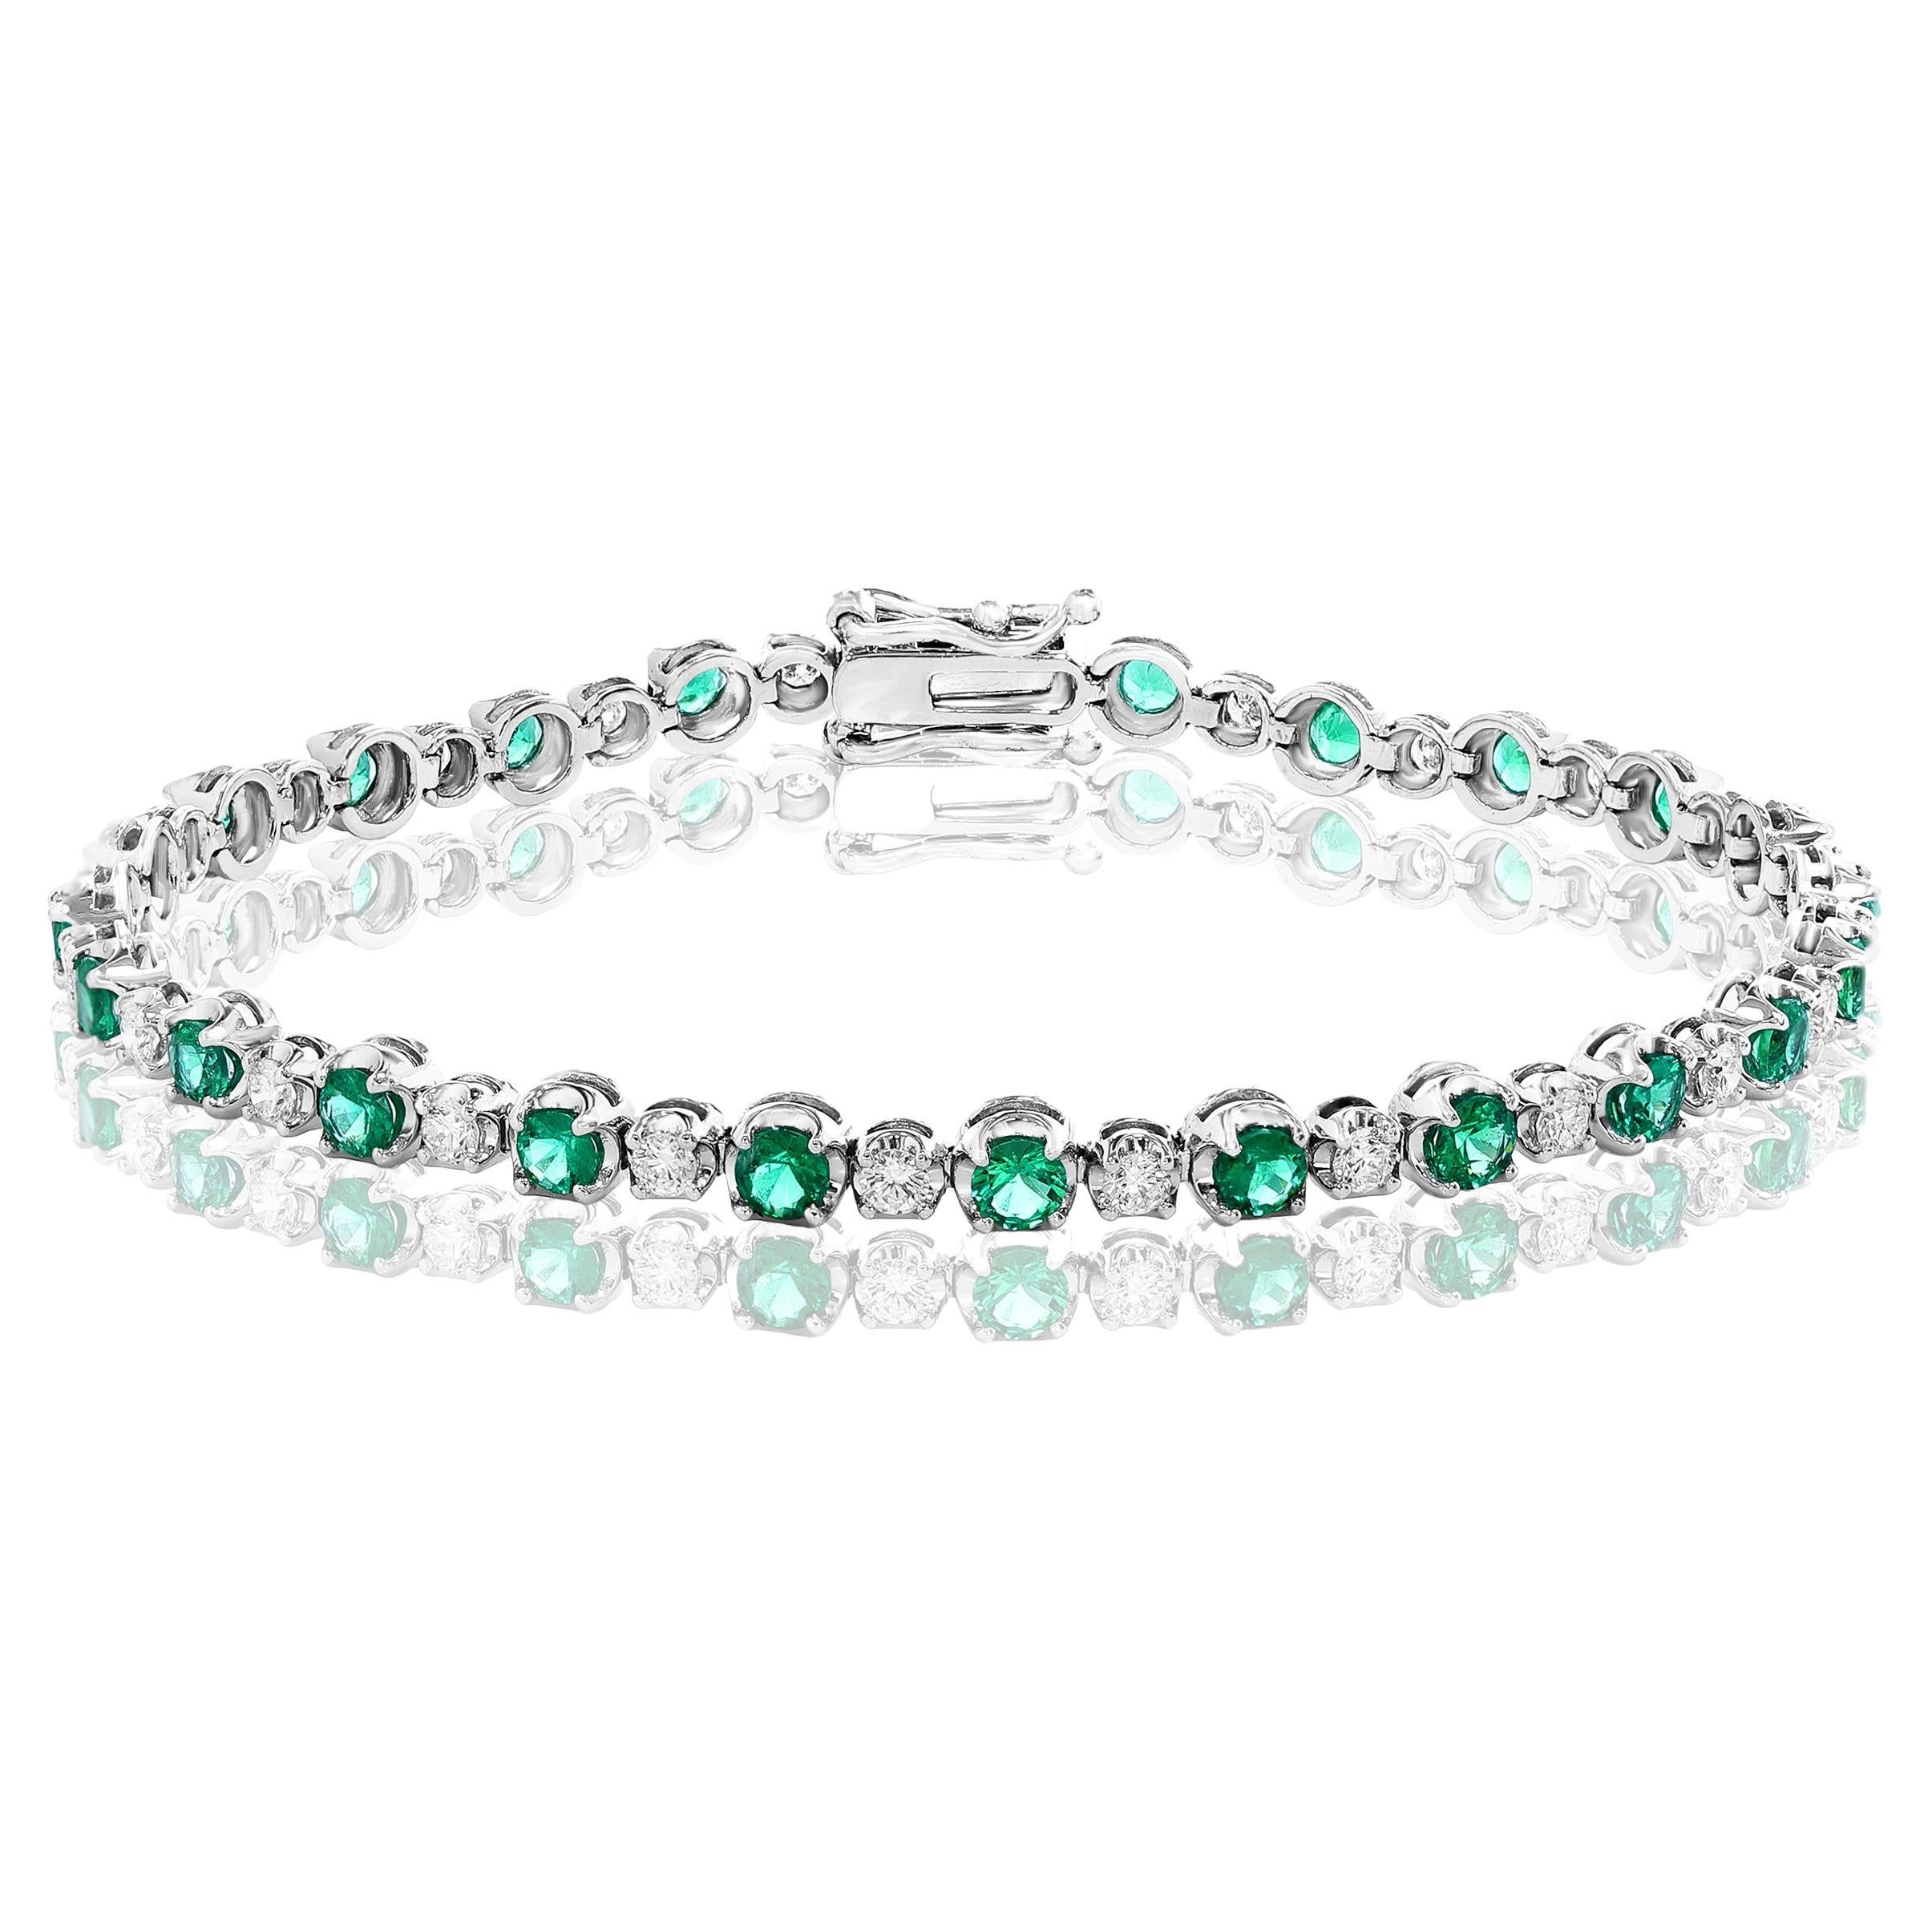 3.42 Carat Brilliant Cut Emerald and Diamond Bracelet in 14k White Gold